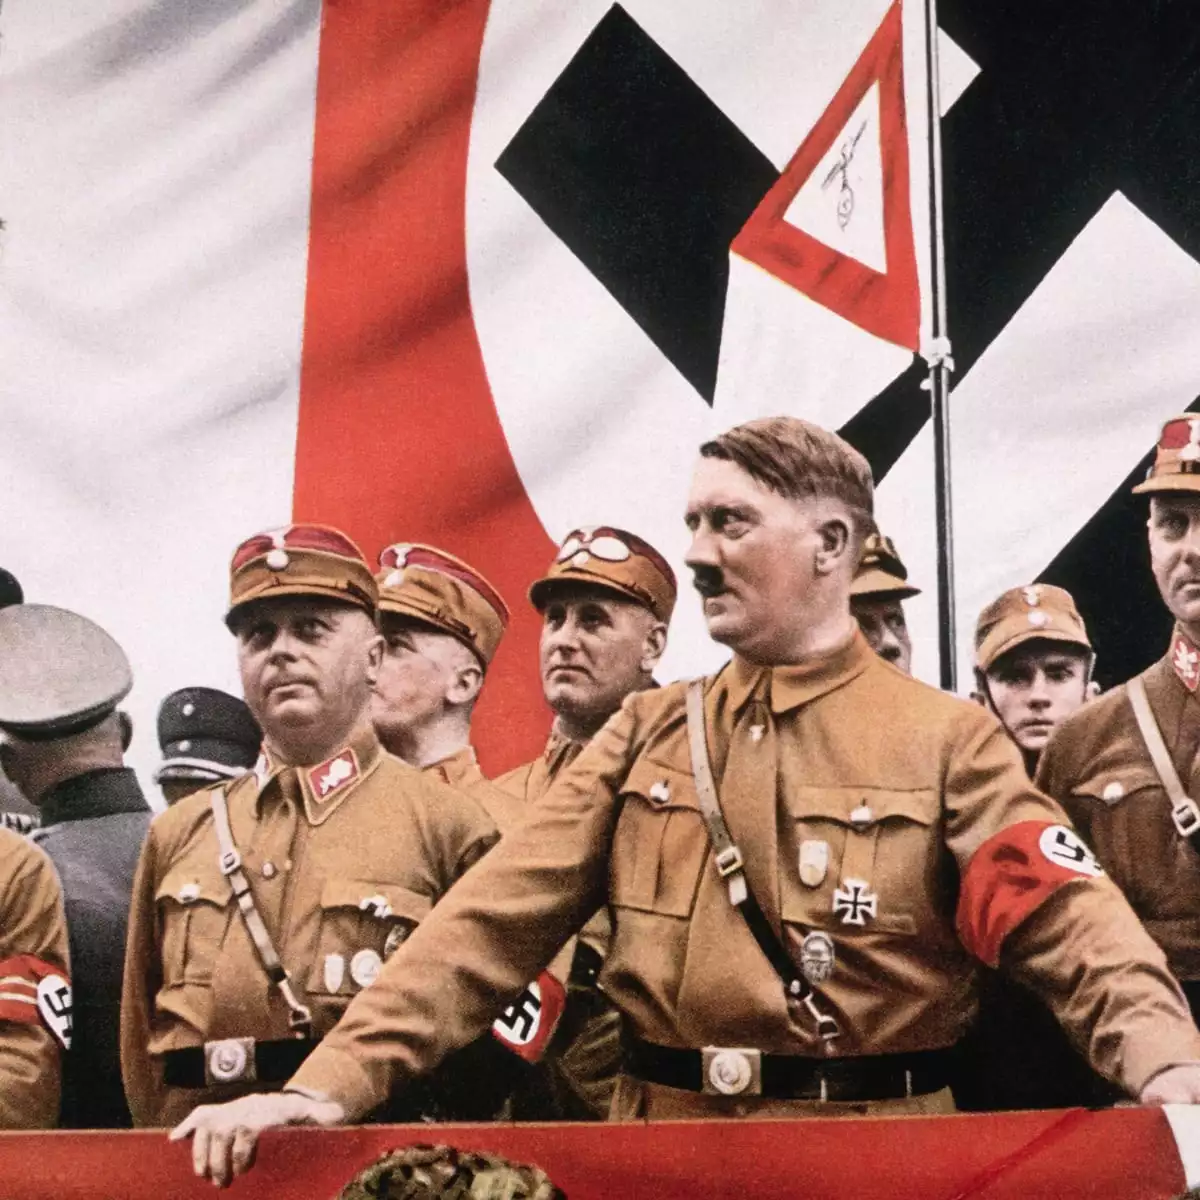 Adolf Hitler Picture